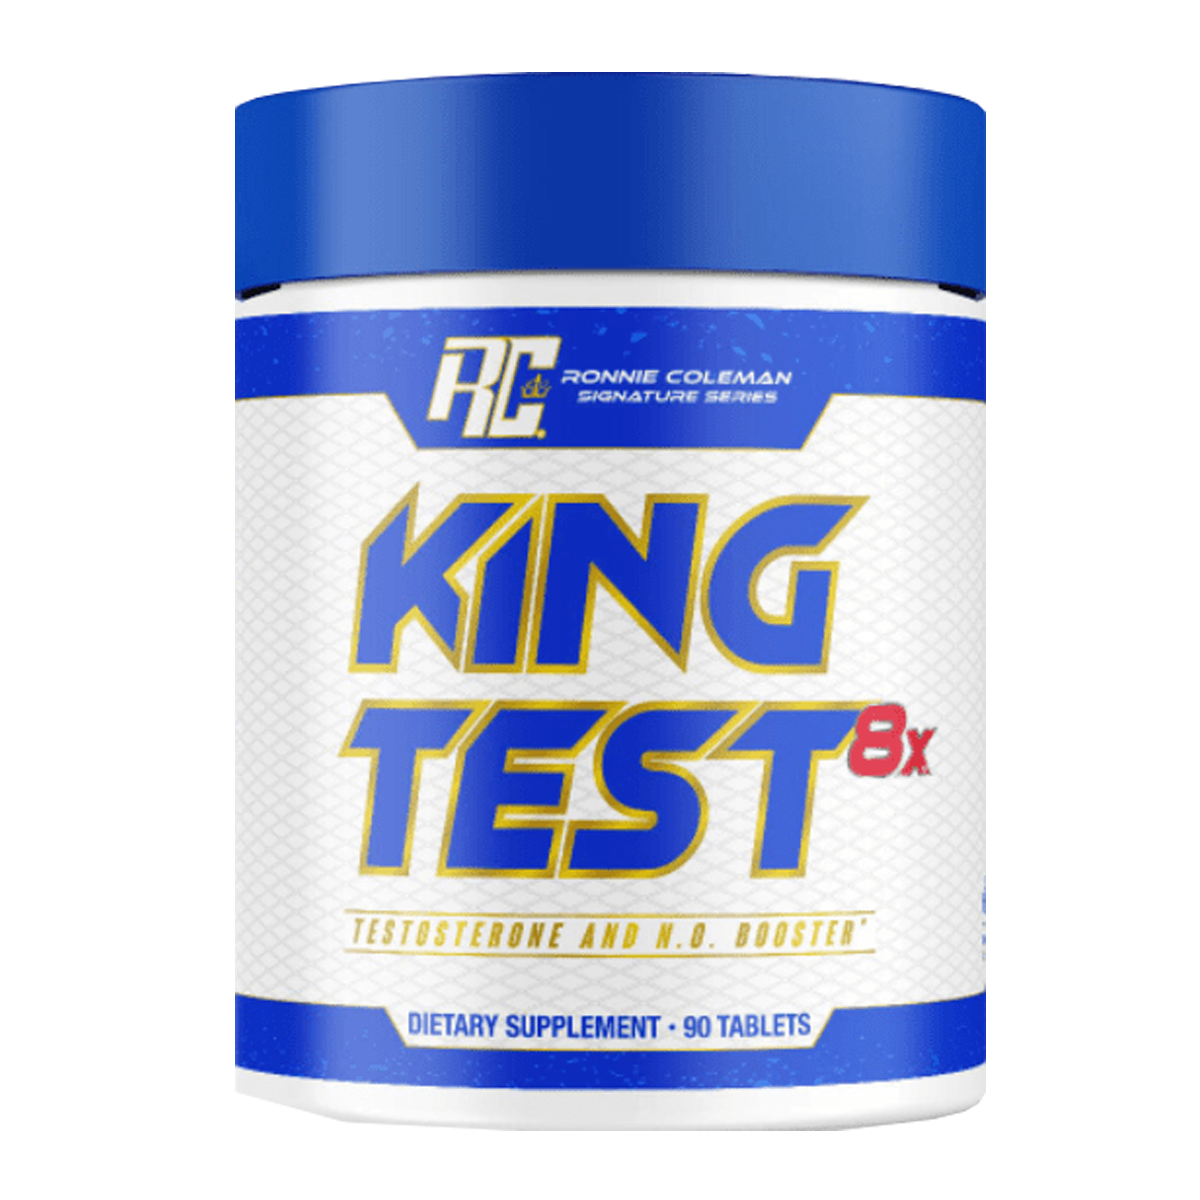 Ronnie Coleman King Test 8x